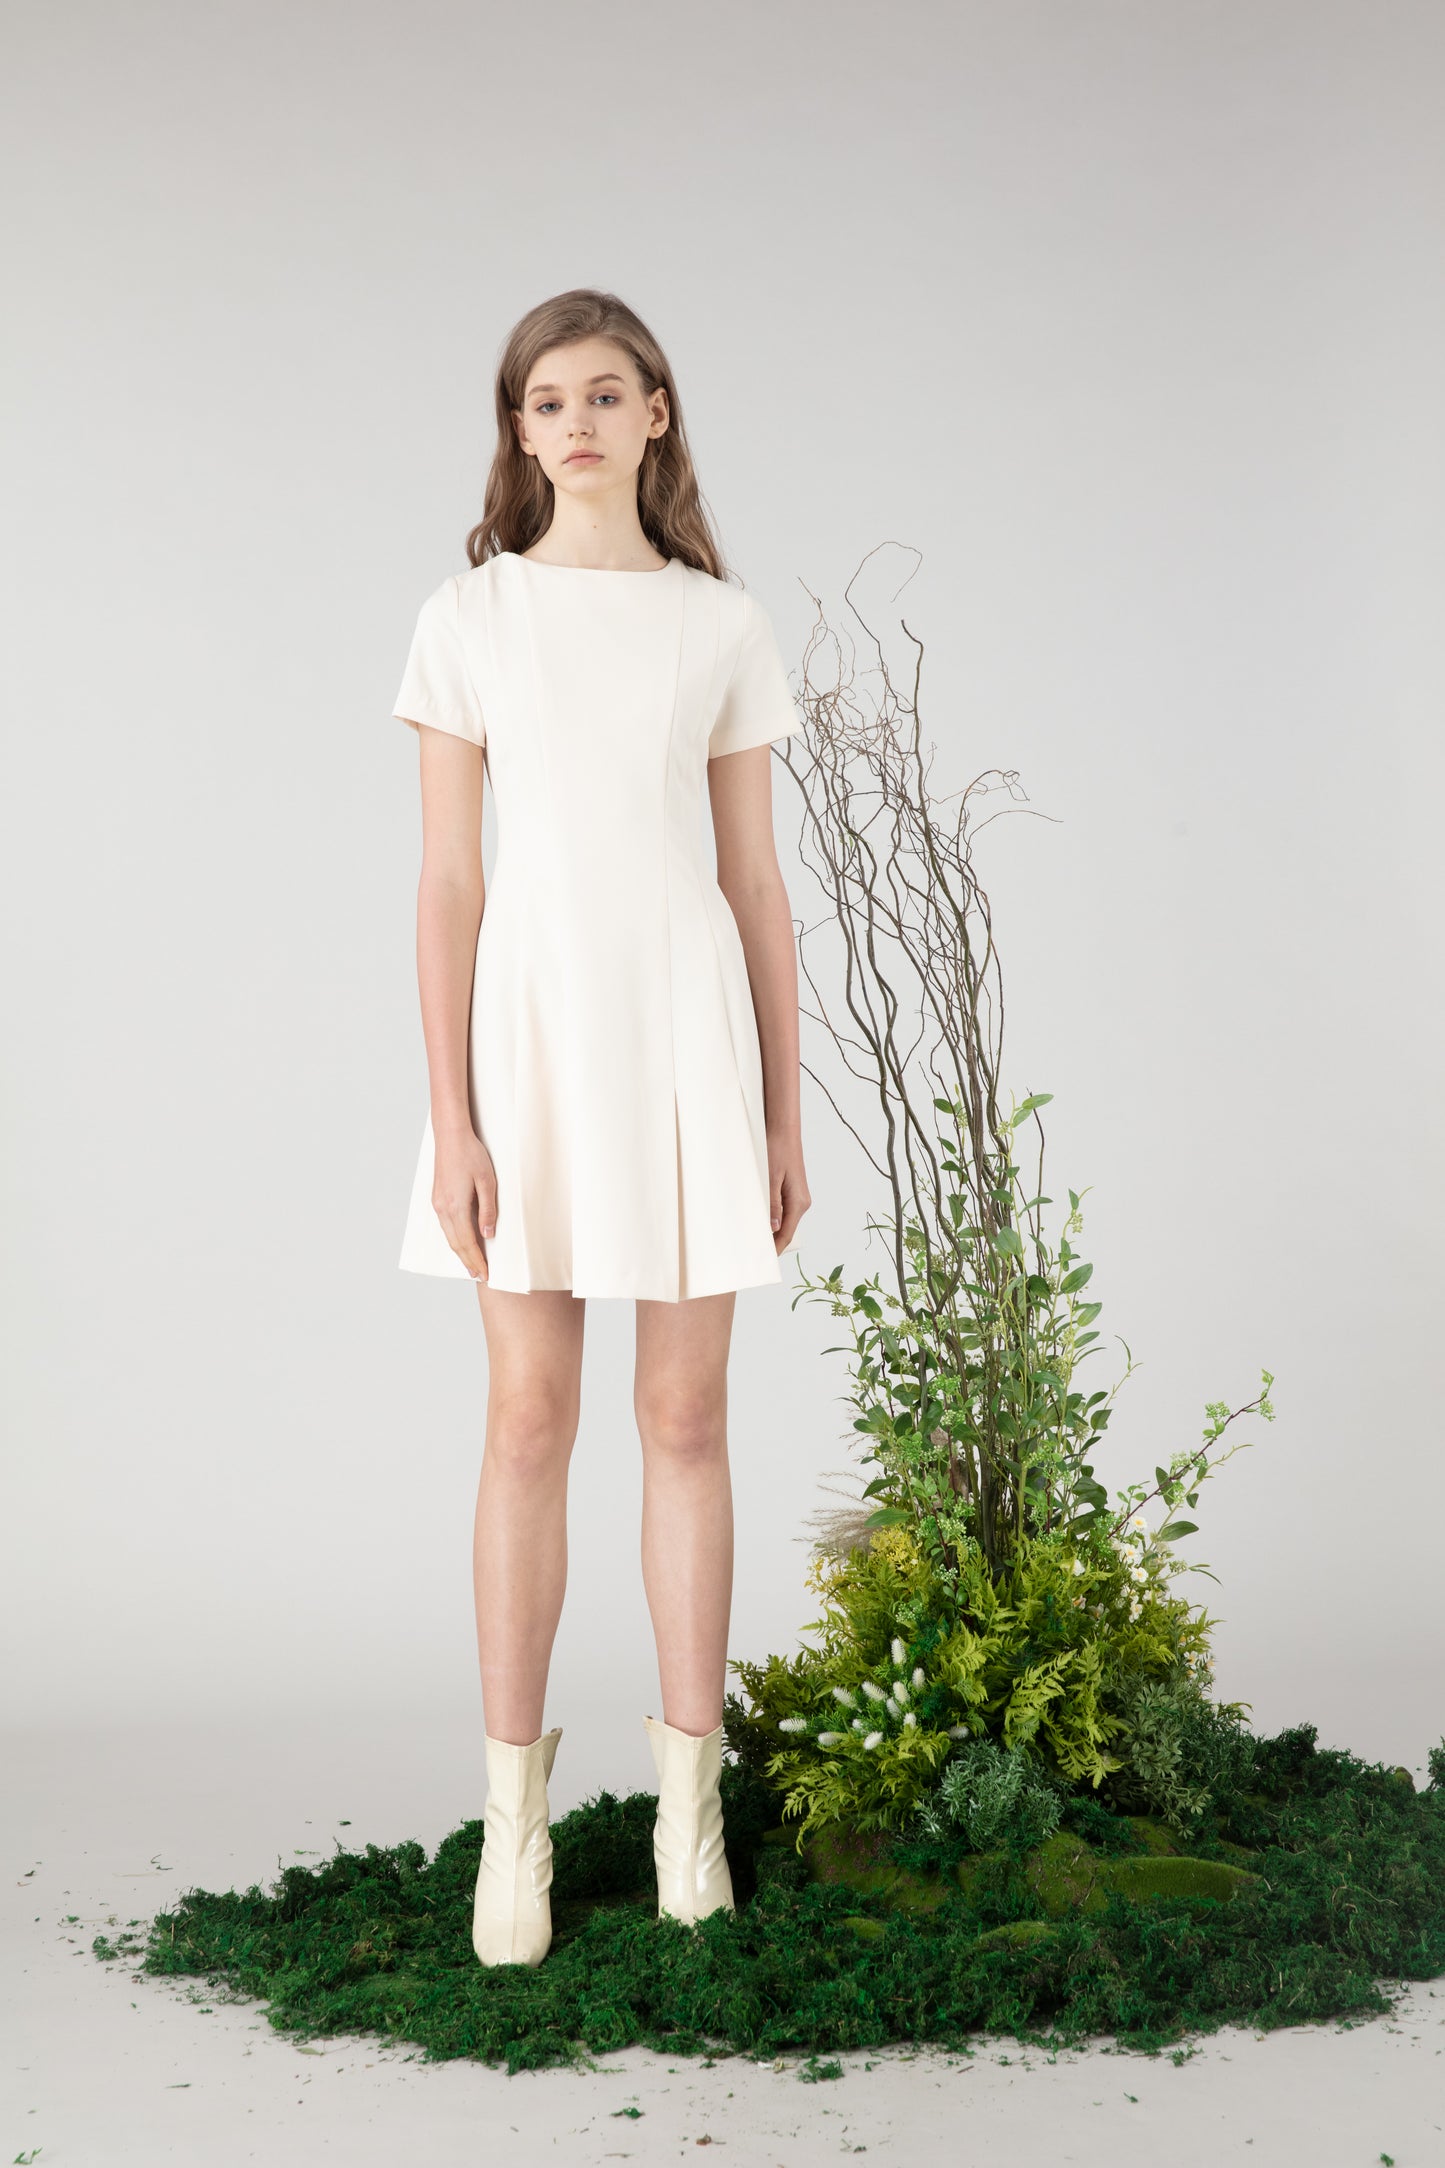 Creamy white mini dress